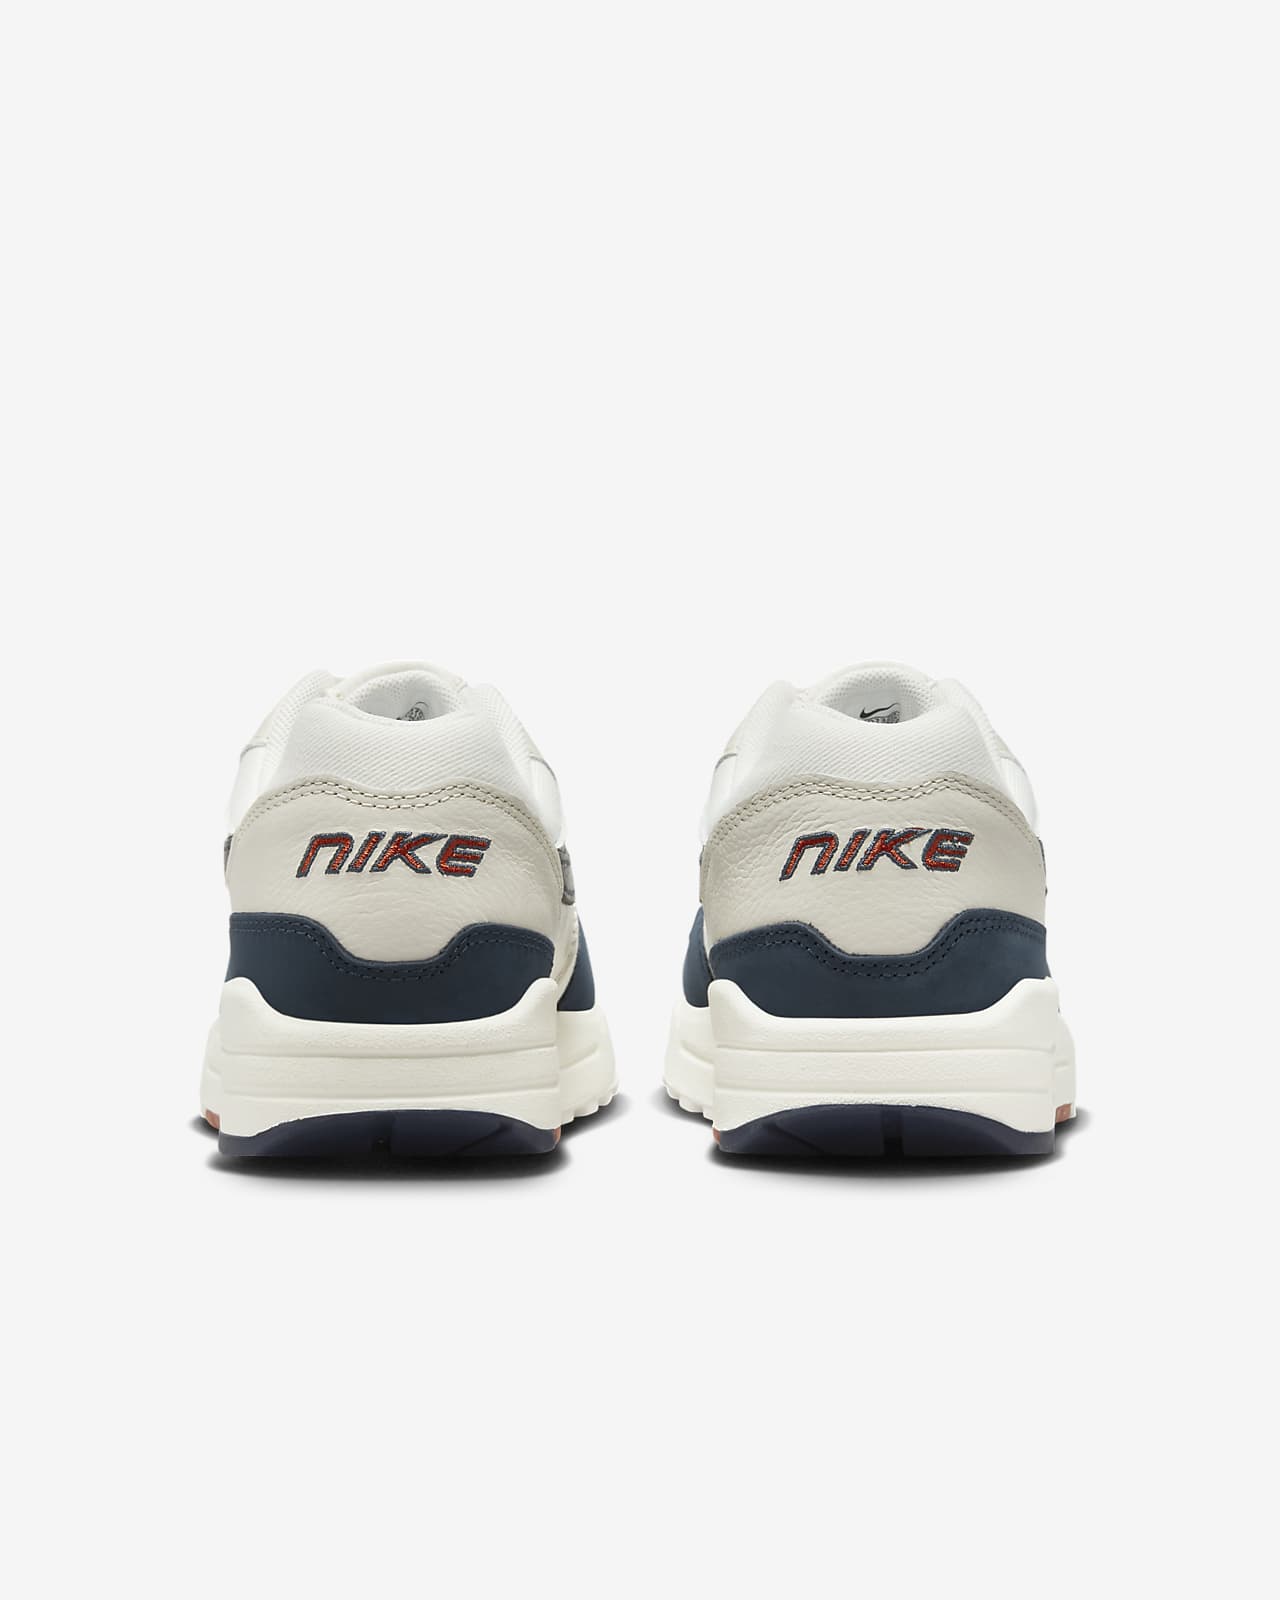 Nike Air Max 1 LX Women's Shoes